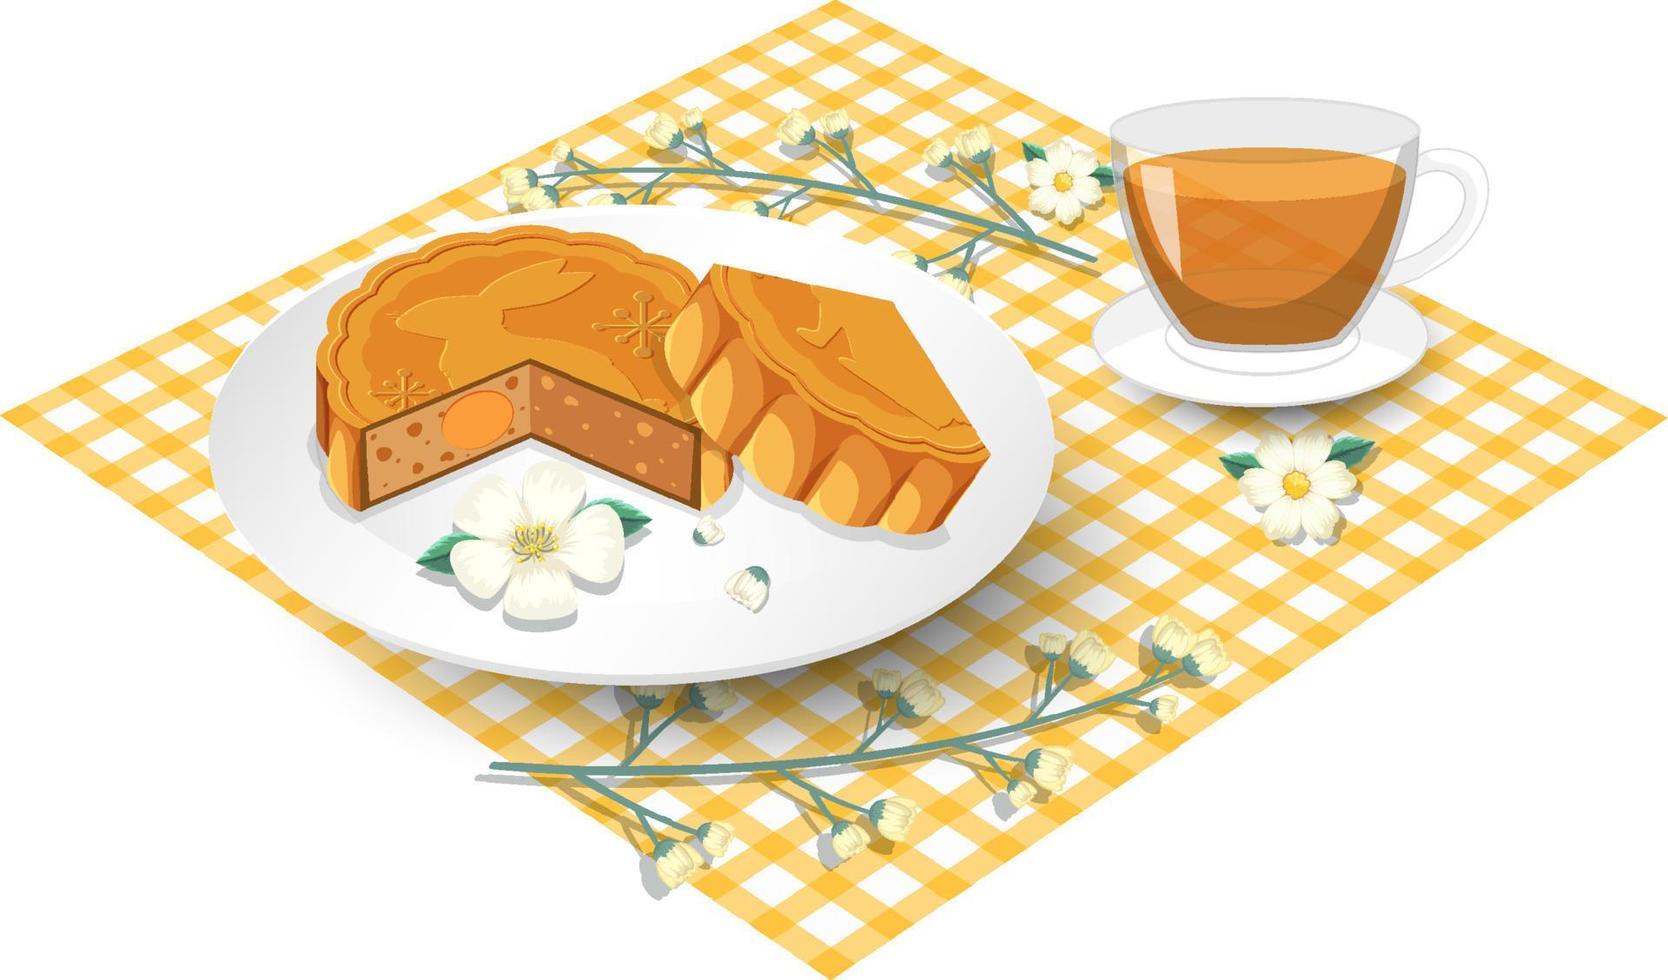 Salted egg yolk mooncake with teacup set on tablecloth vector